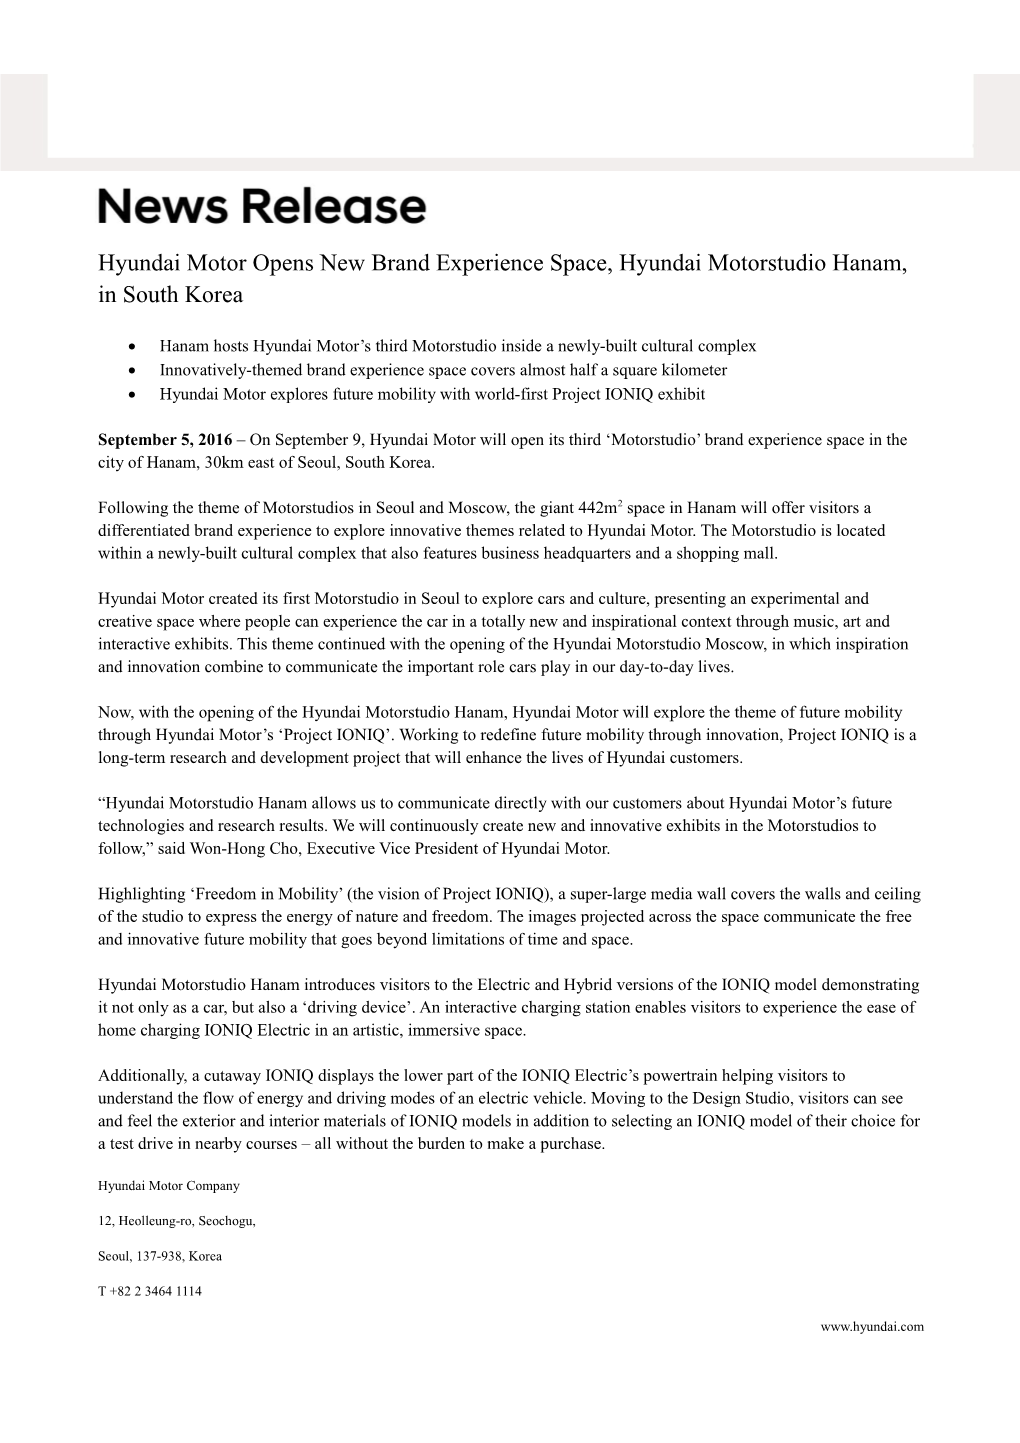 Hyundai Motor Opens New Brand Experience Space, Hyundaimotorstudiohanam, in South Korea